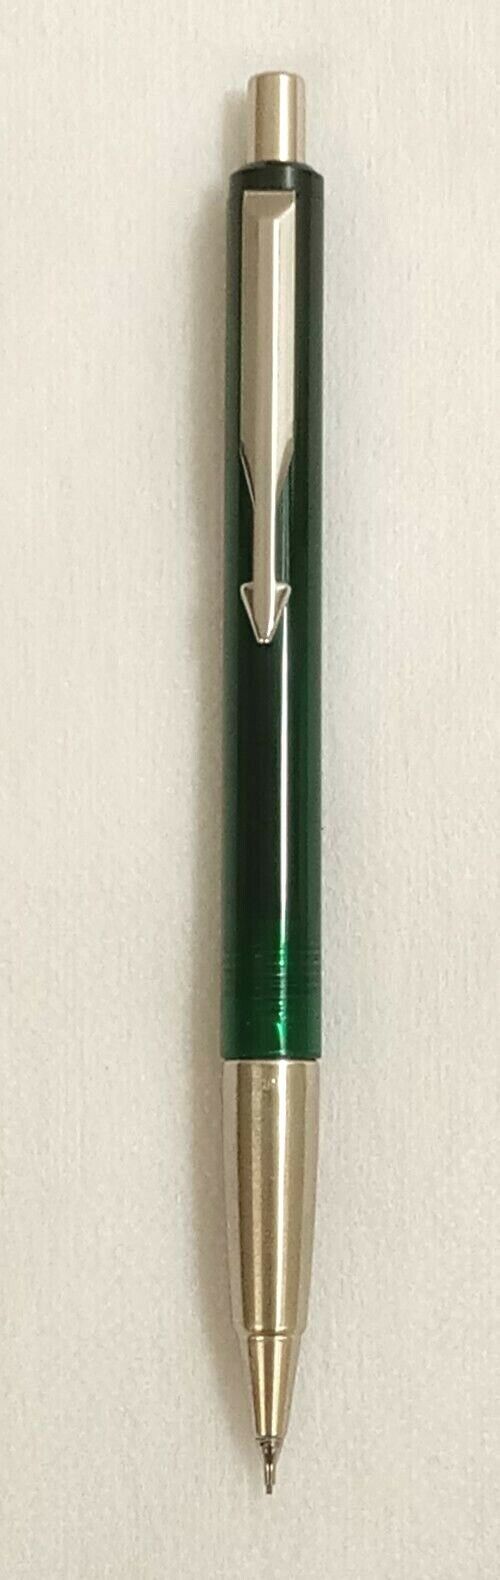 Parker Victor  Propelling Pencil Green Color Original Lead Size: 0.5 mm